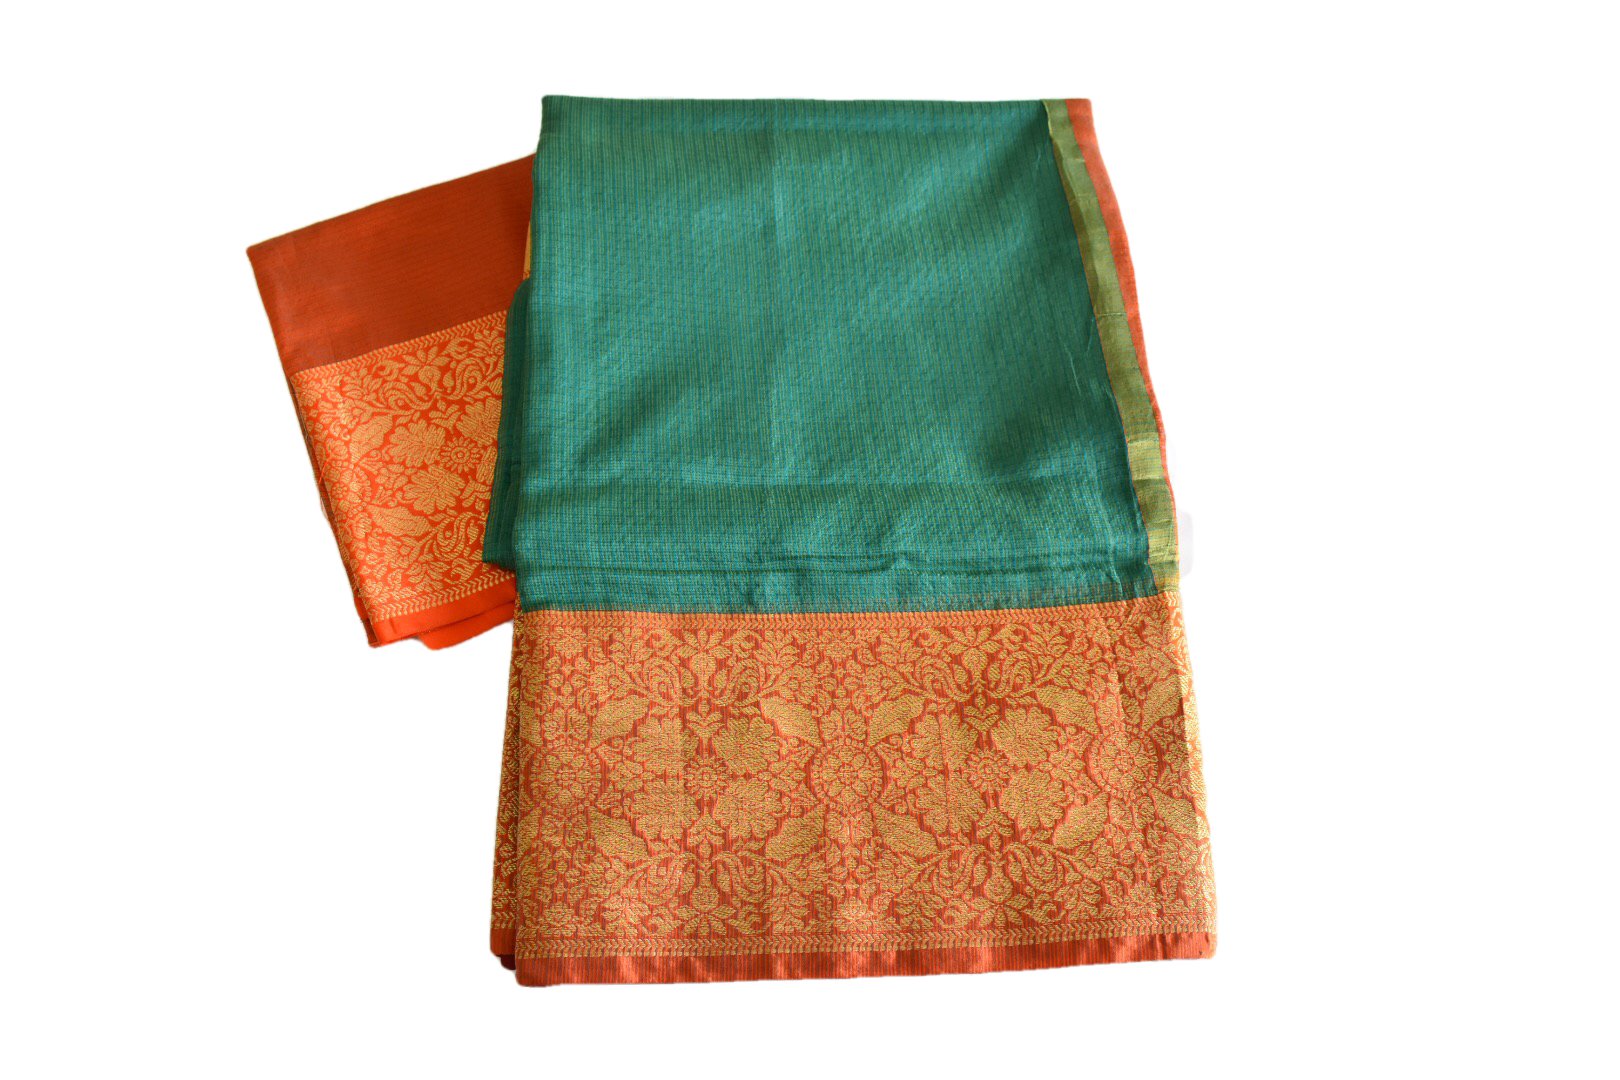 Green Color - Silk Cotton Blend Handloom Saree - Thick Wide Border - Gold Zari Pattern